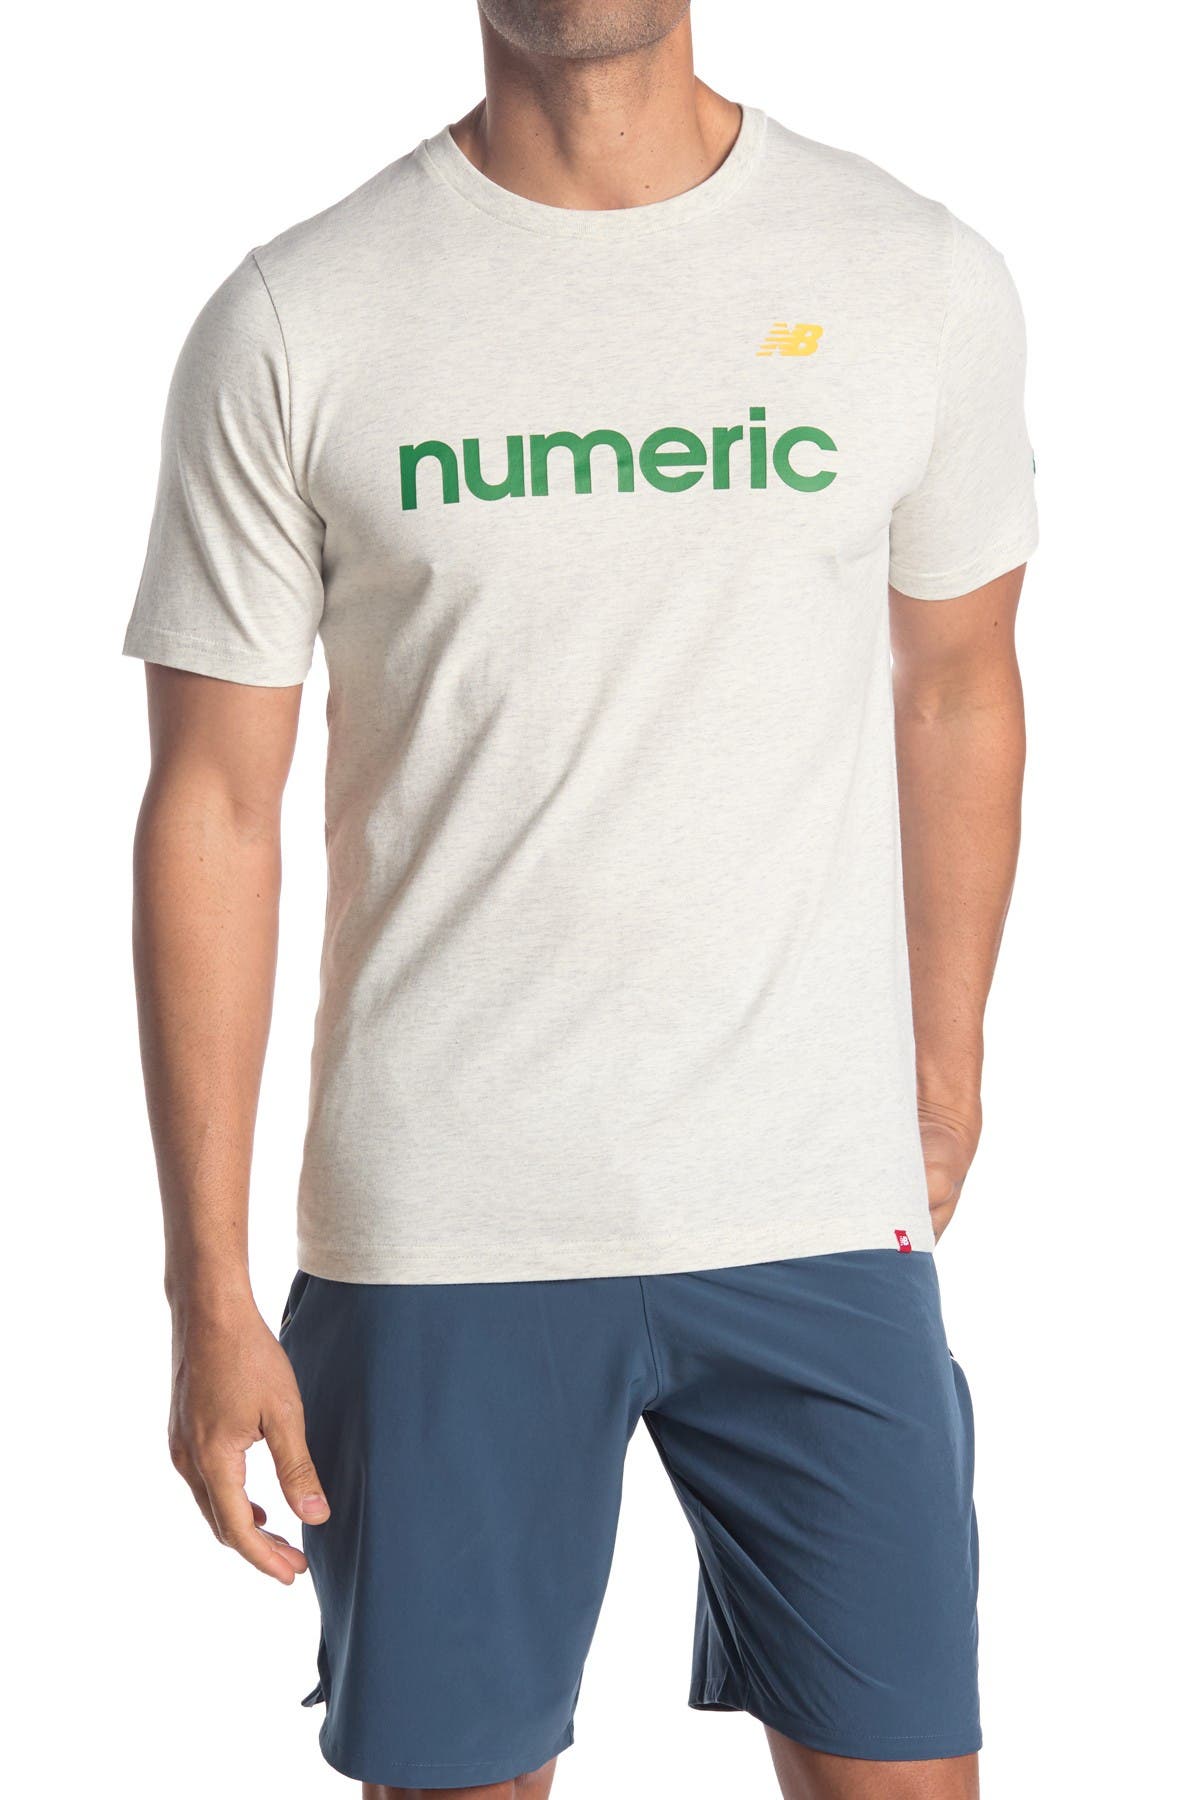 new balance numeric shirt